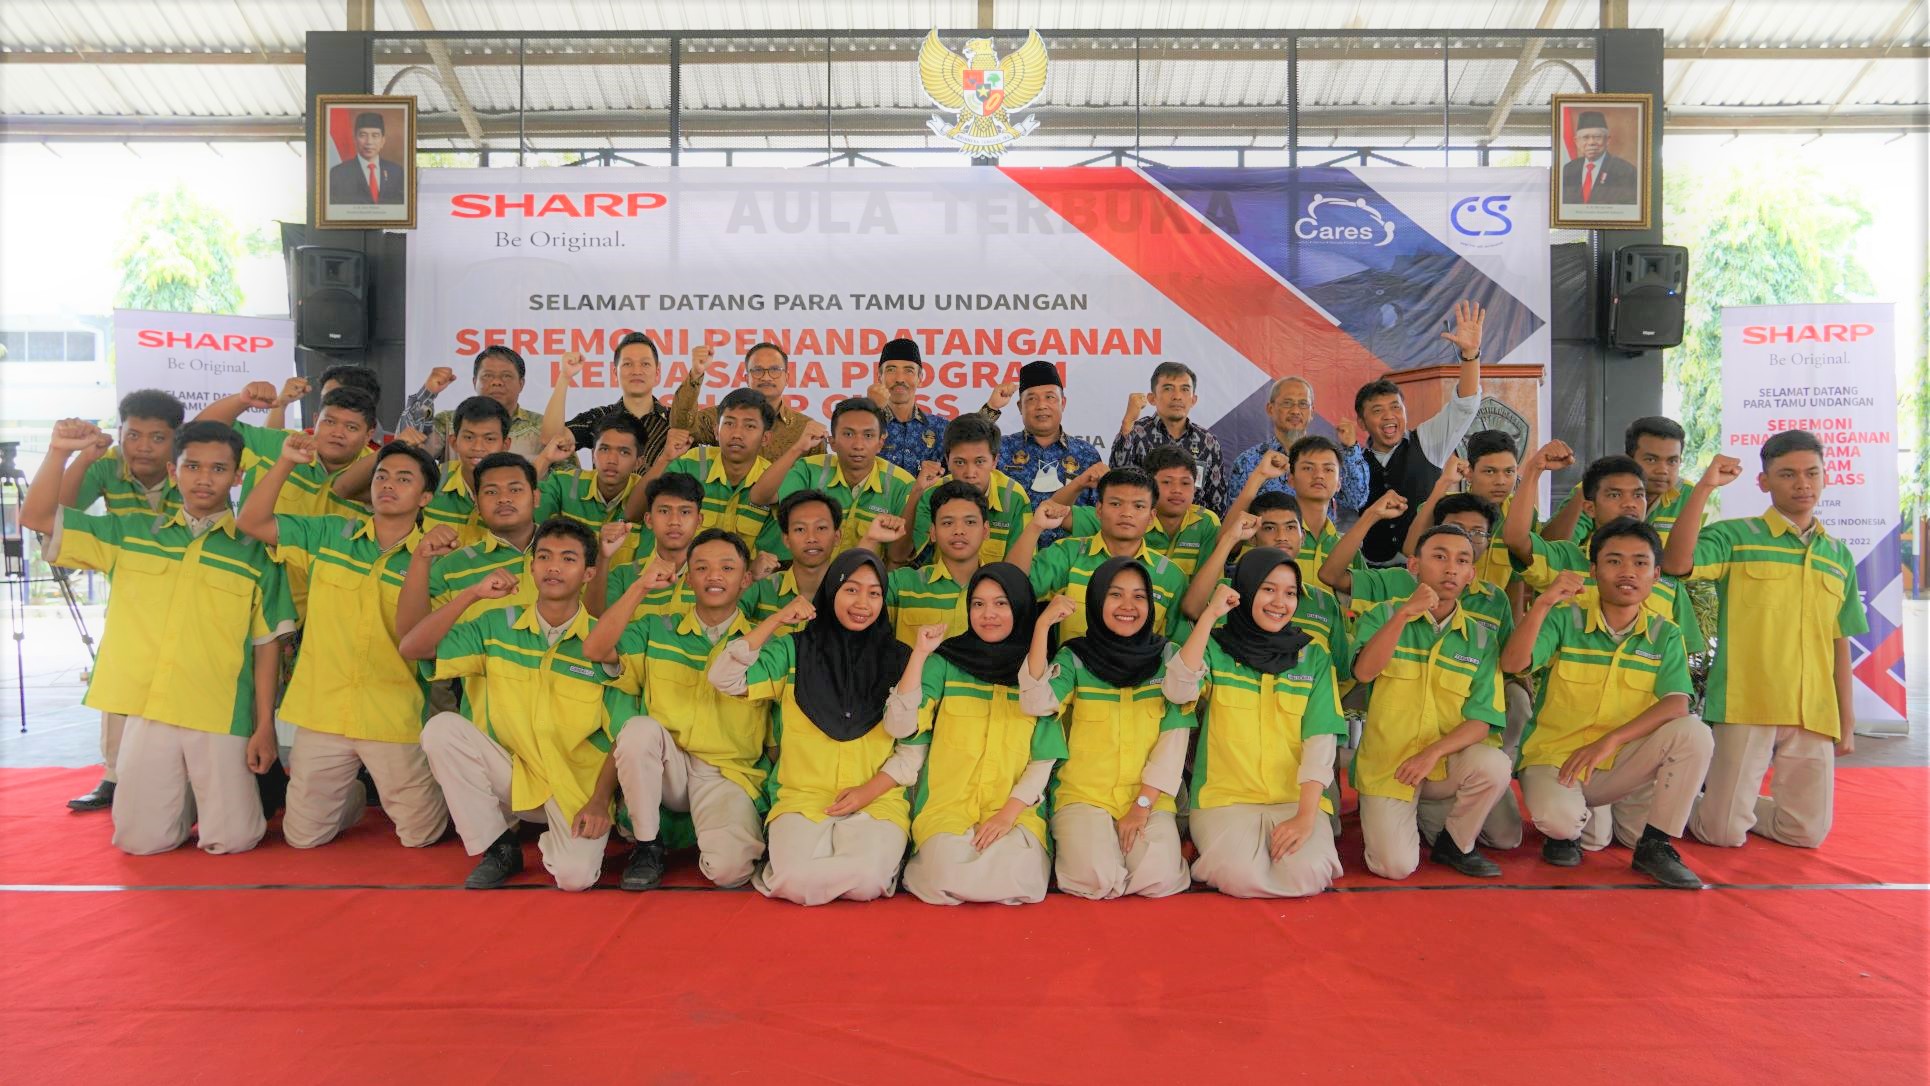 Perwakilan Sharp Indonesia dengan Siswa Sharp Class SMKN 1 Blitar